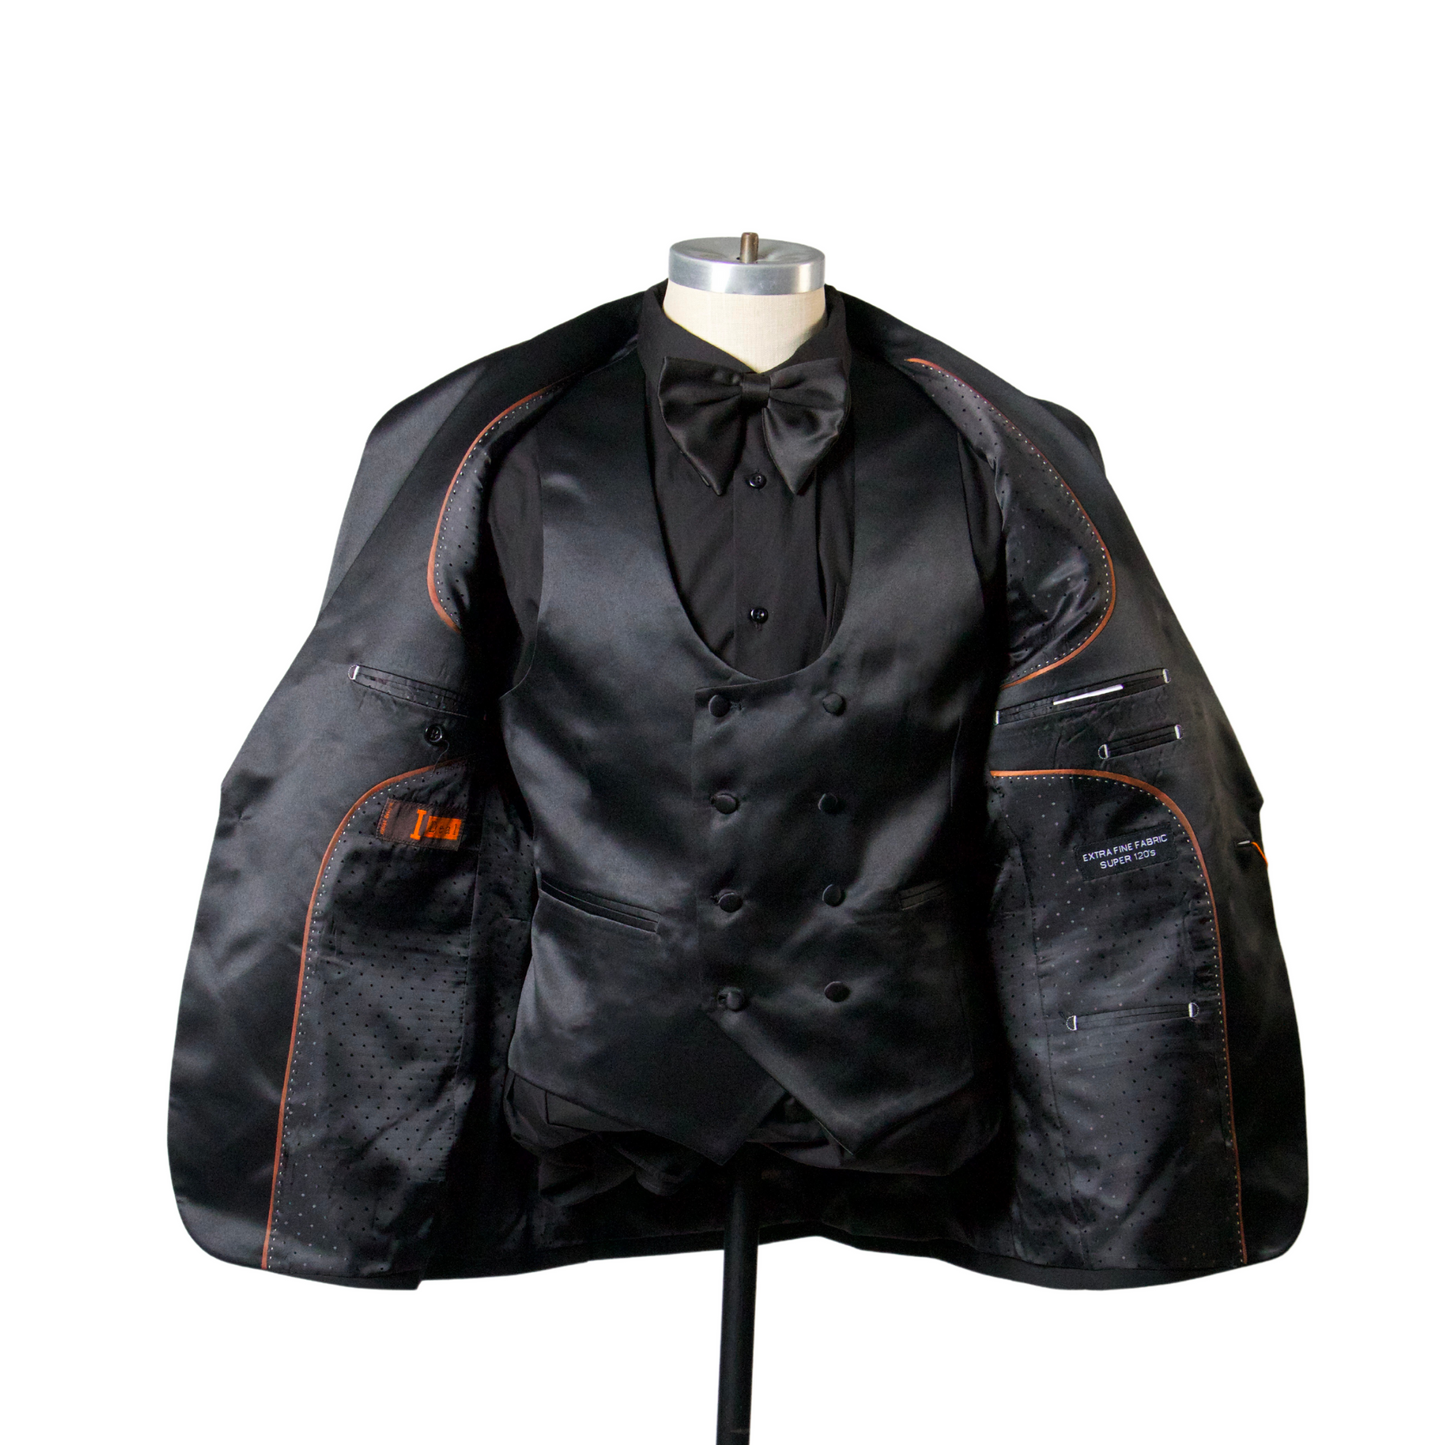 1 Button Shawl Lapel Tuxedo with Vest - Black